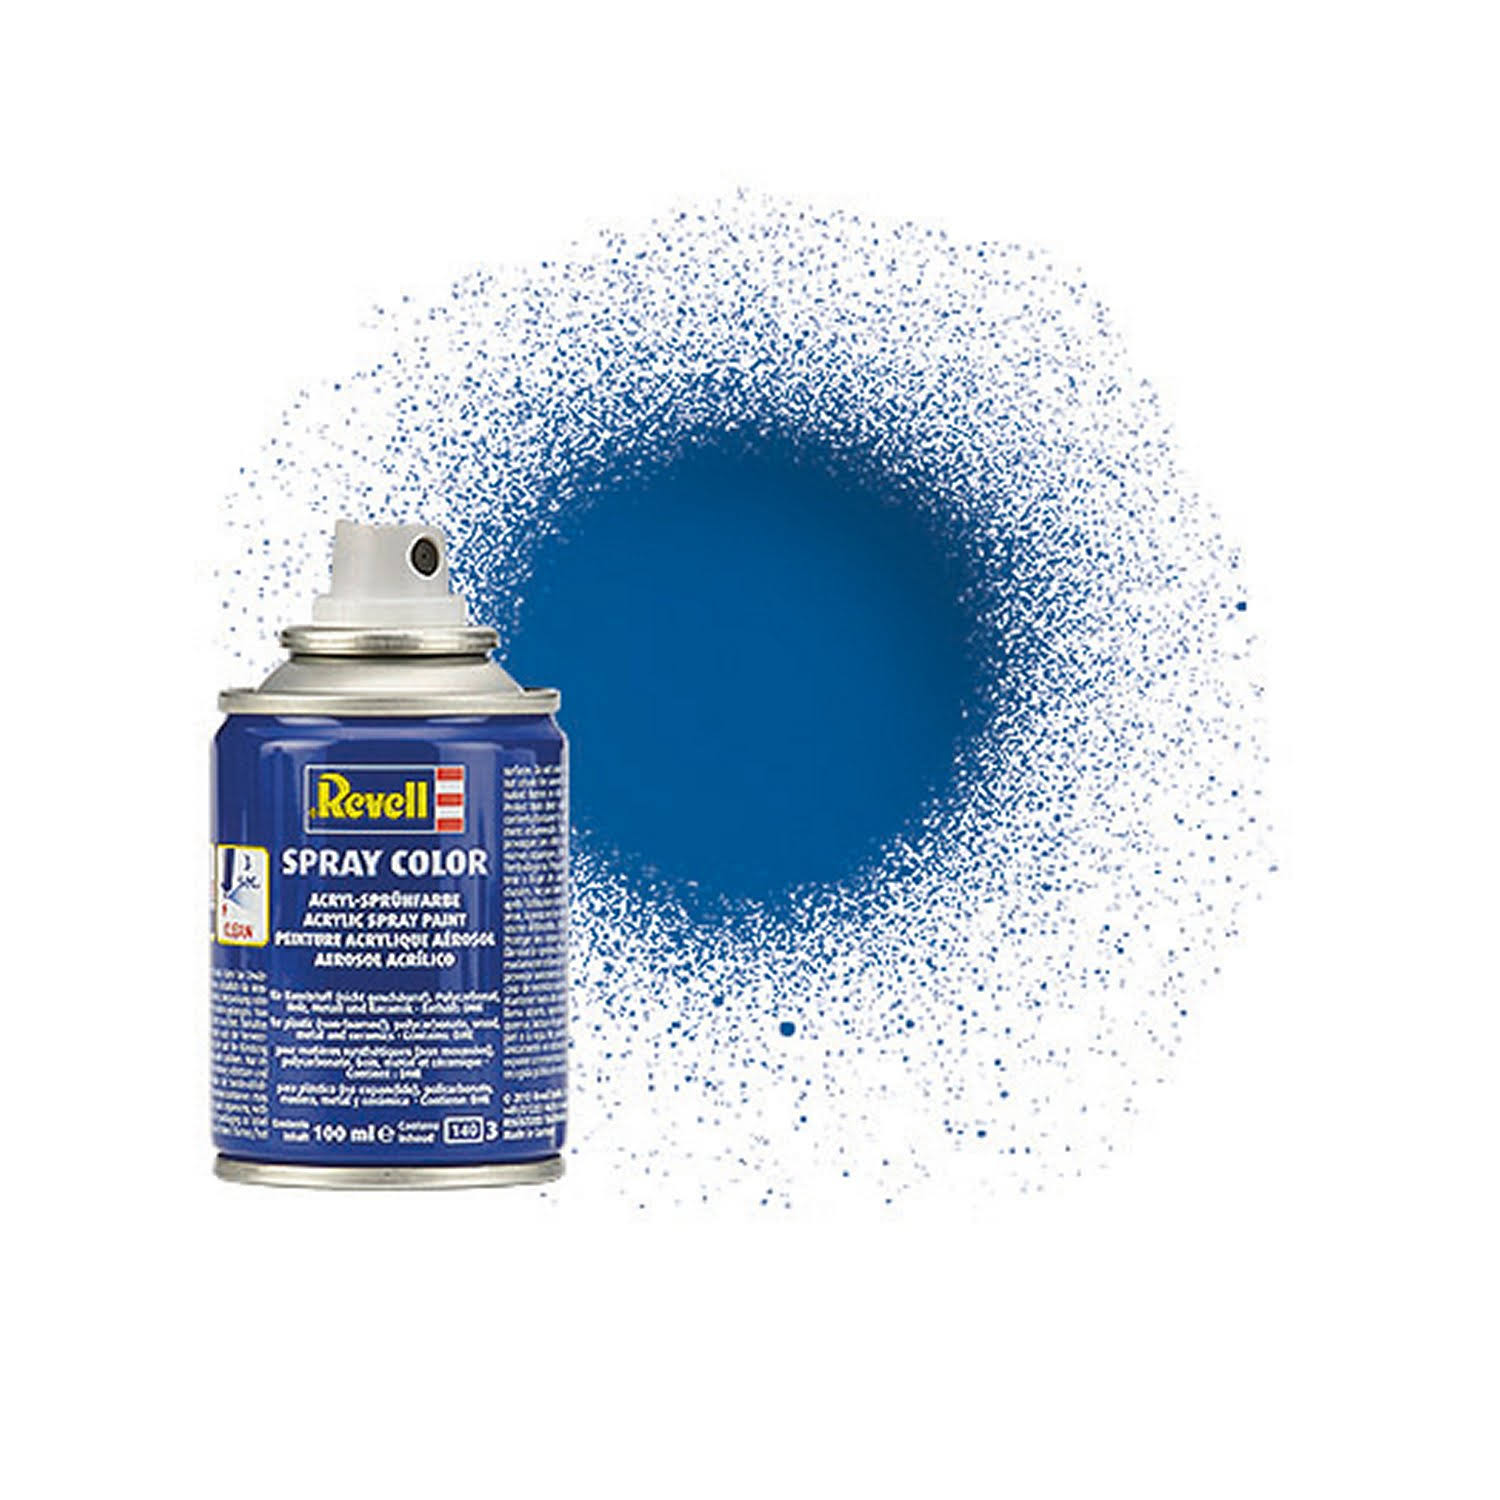 Revell Spray Color Acrylic Paint (Blue Glossy Finish)